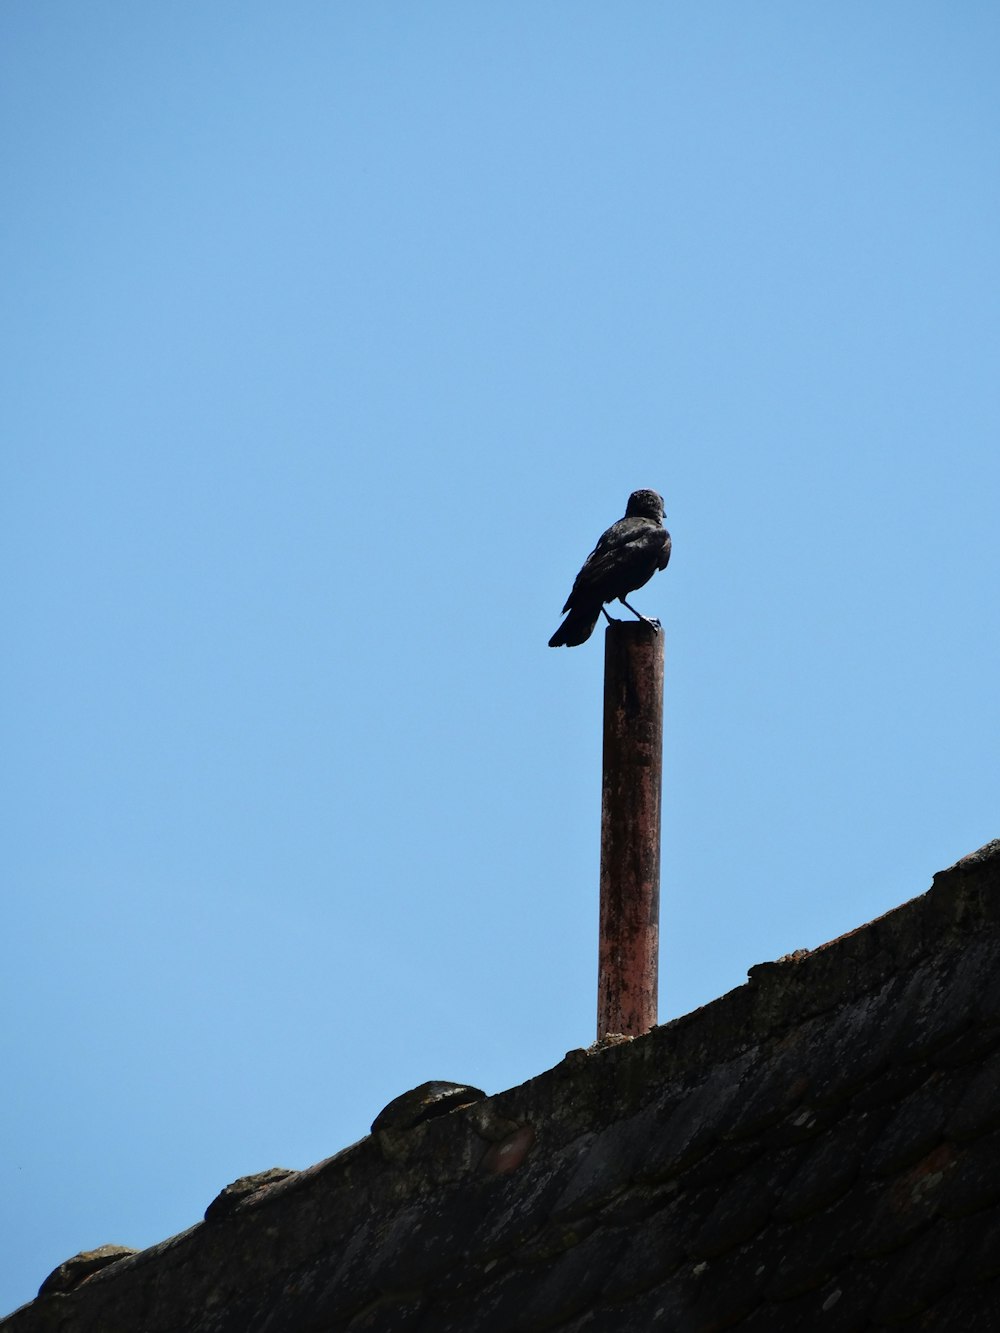 black bird on brown wooden post under blue sky during daytime